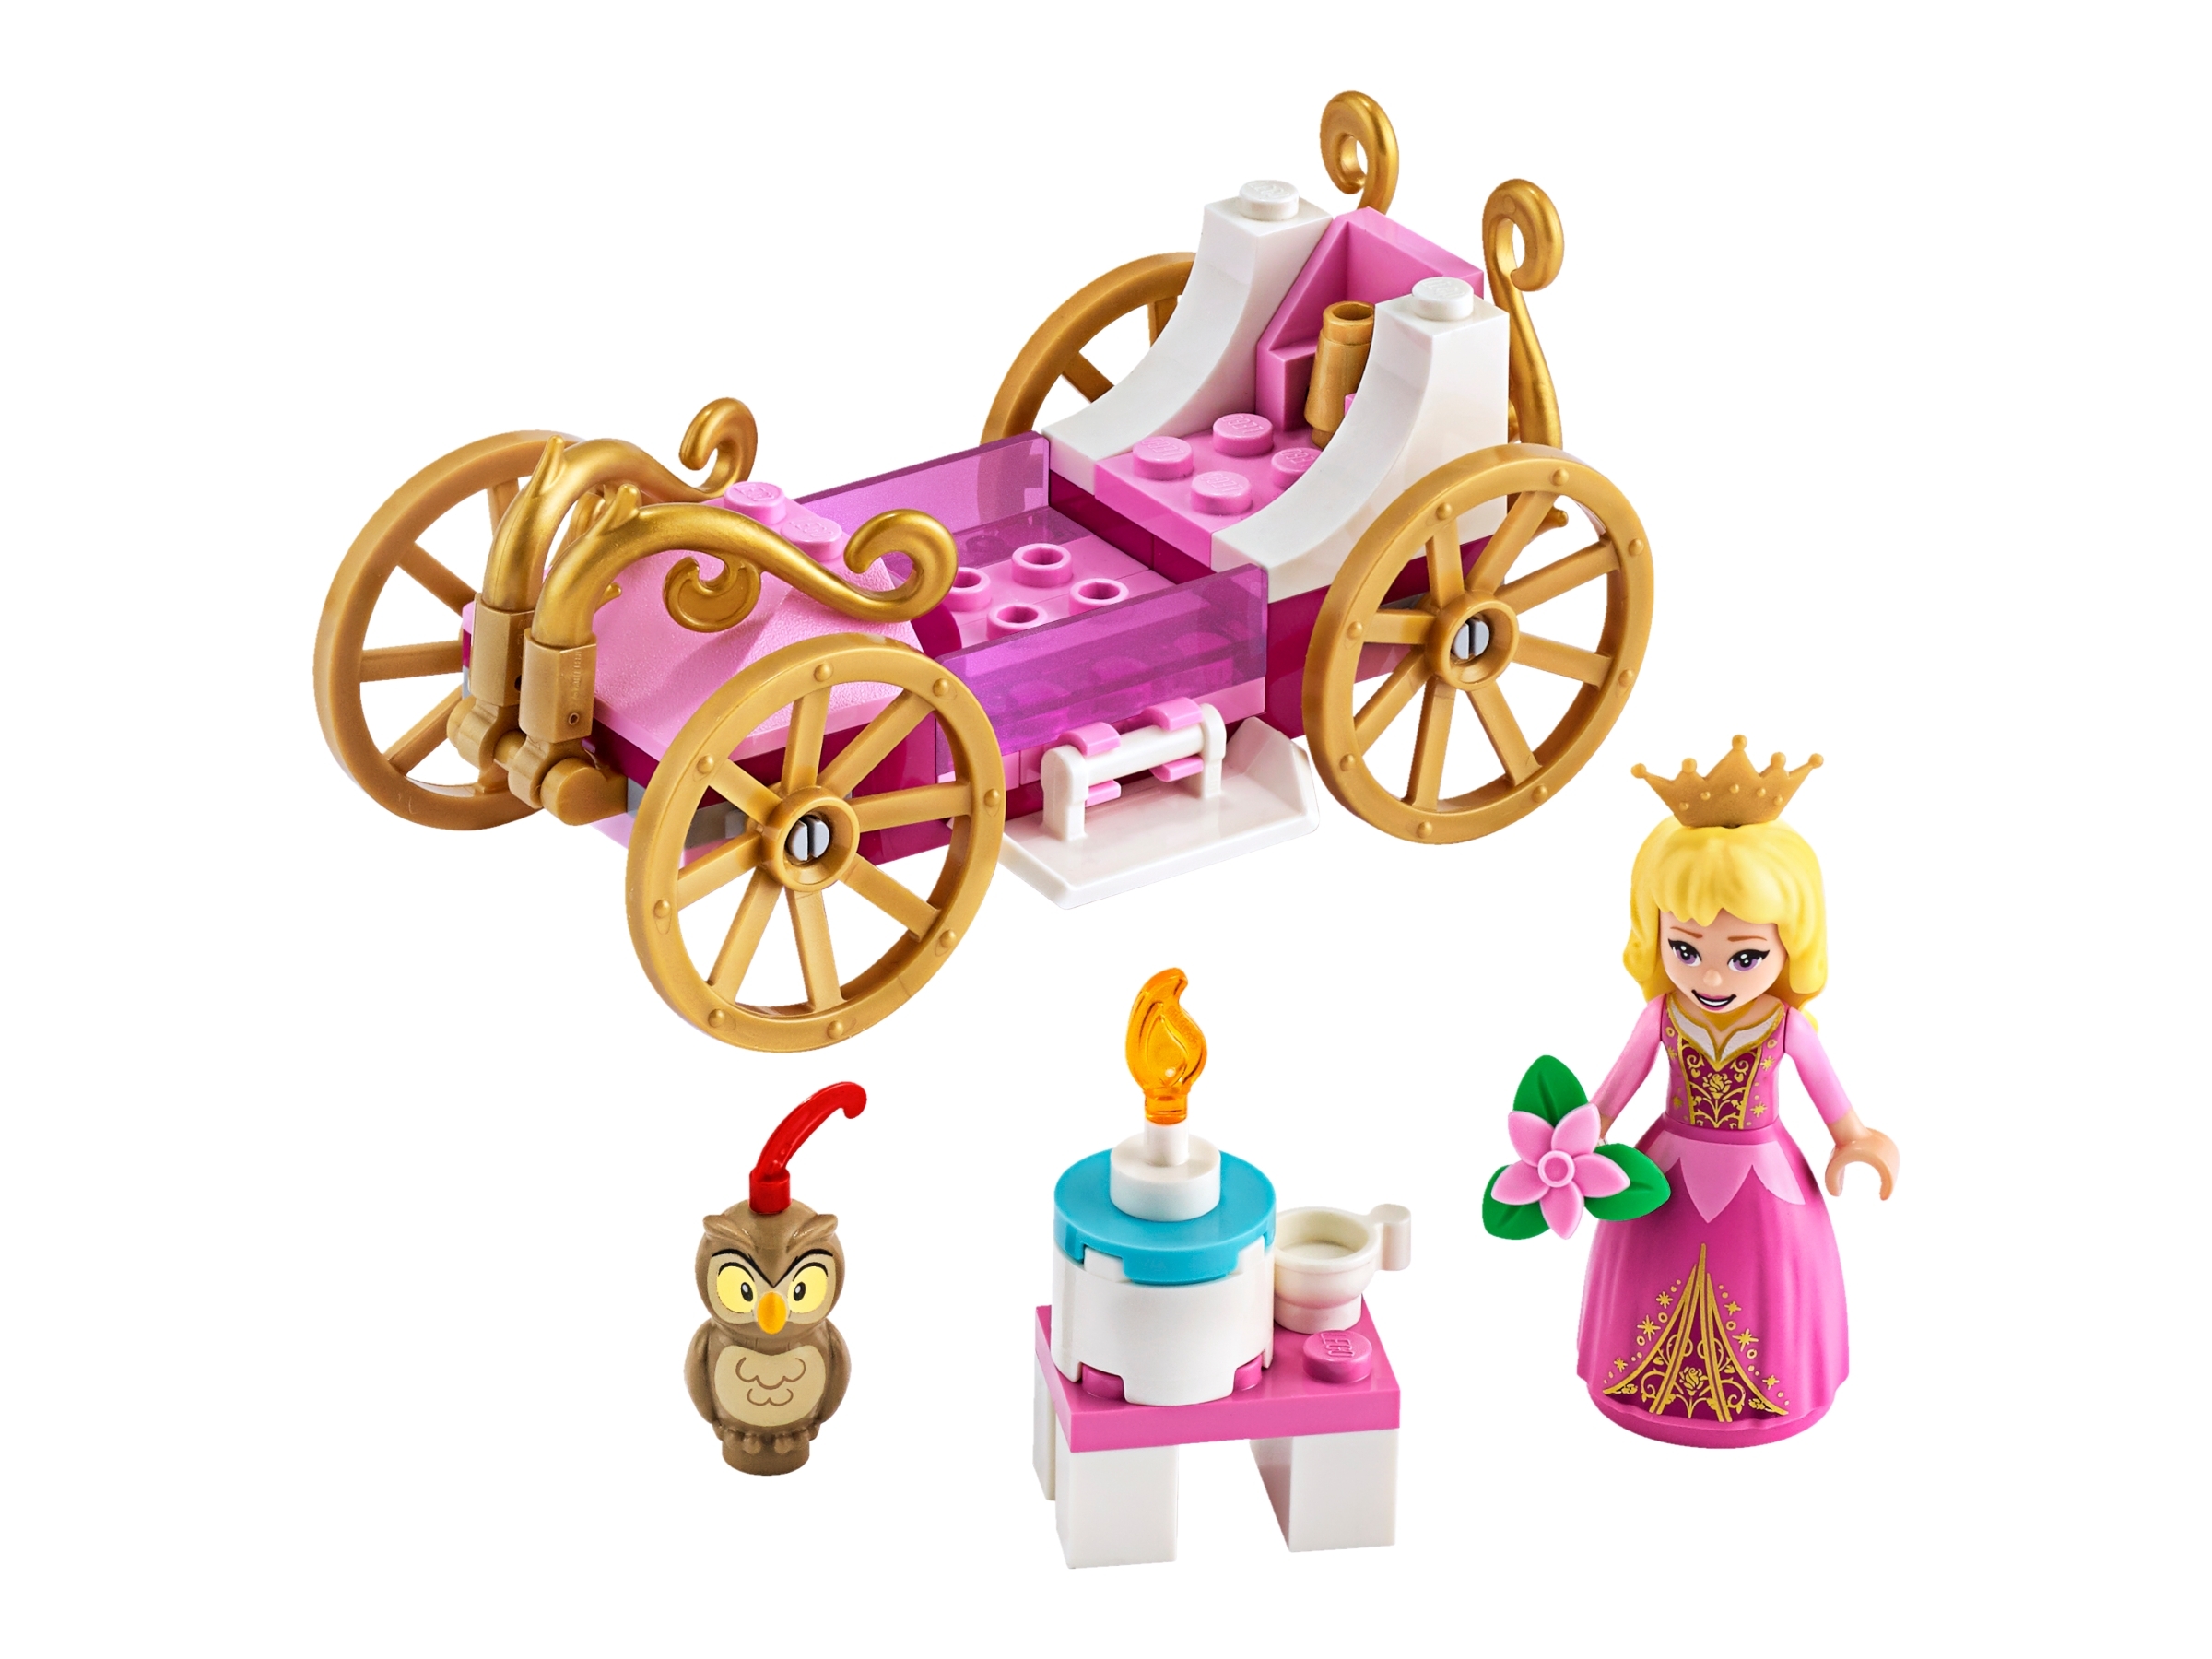 Lego Disney Princess Royal Carriage Aurora S Building Kit Sleeping Beauty 43173 